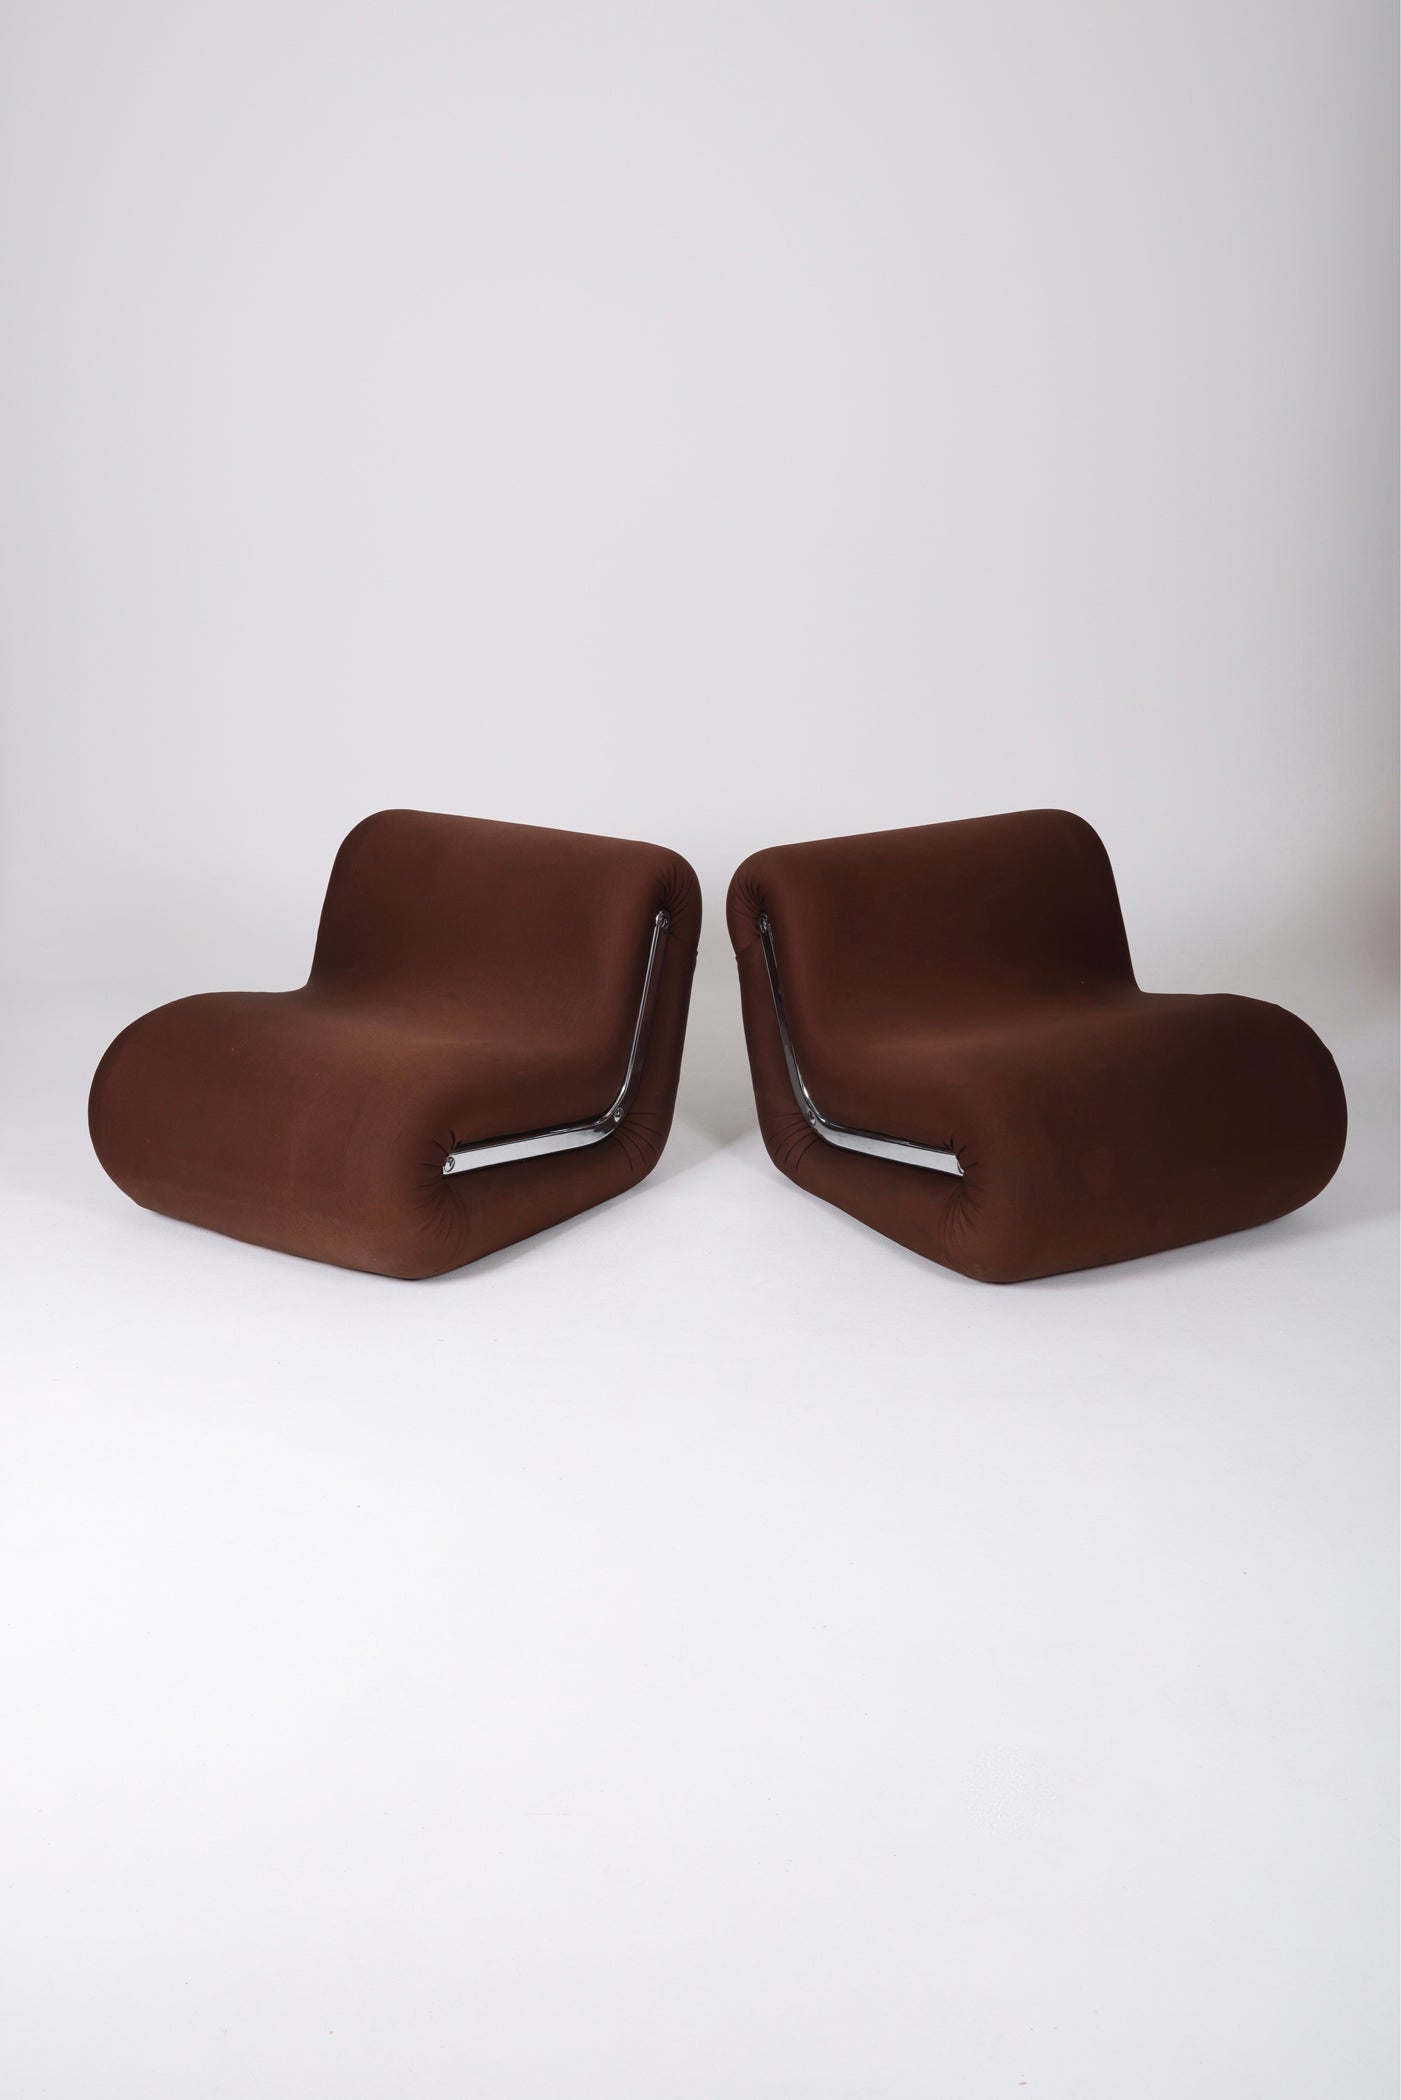 Boomerang armchair by Rodolfo Bonetto